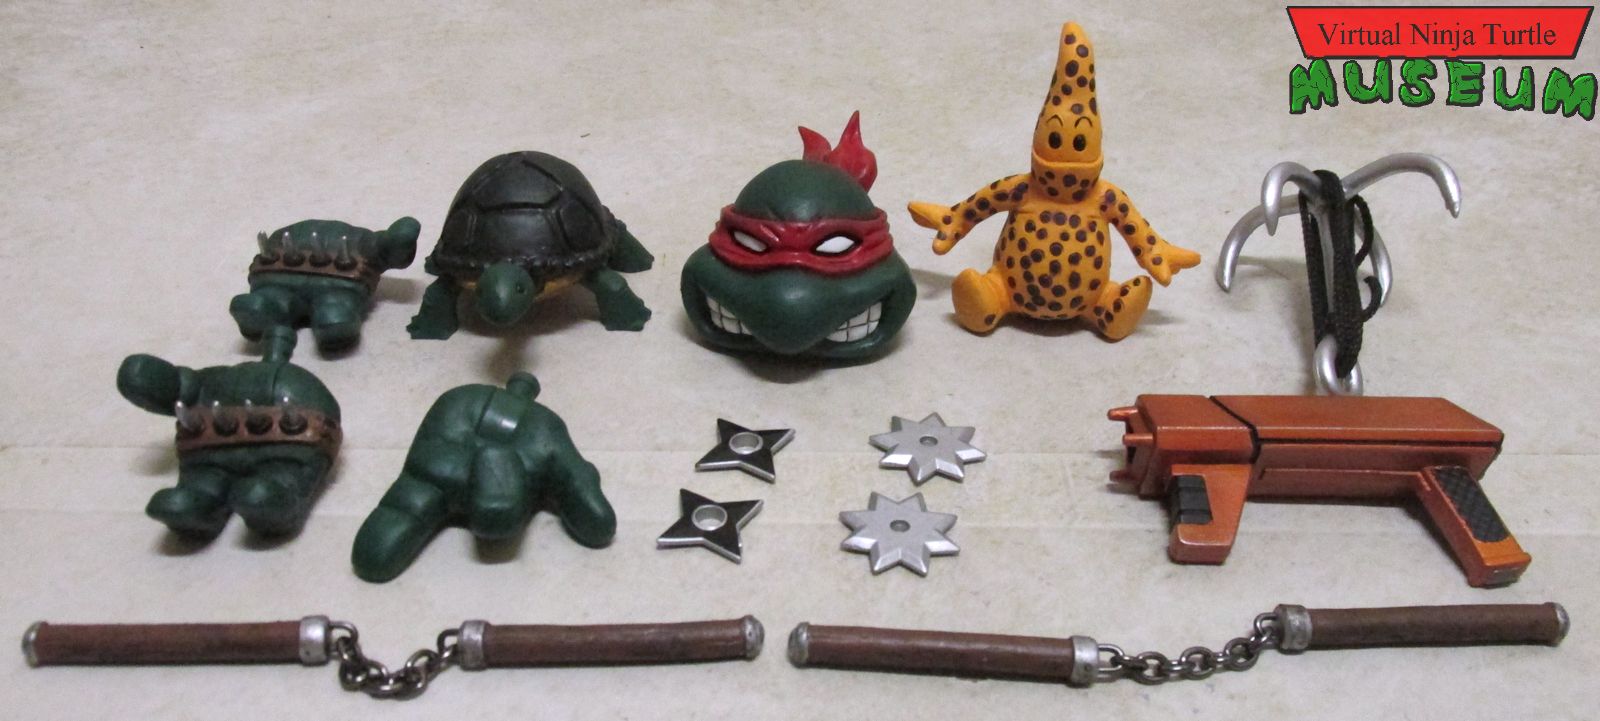 Michelangelo's accessories